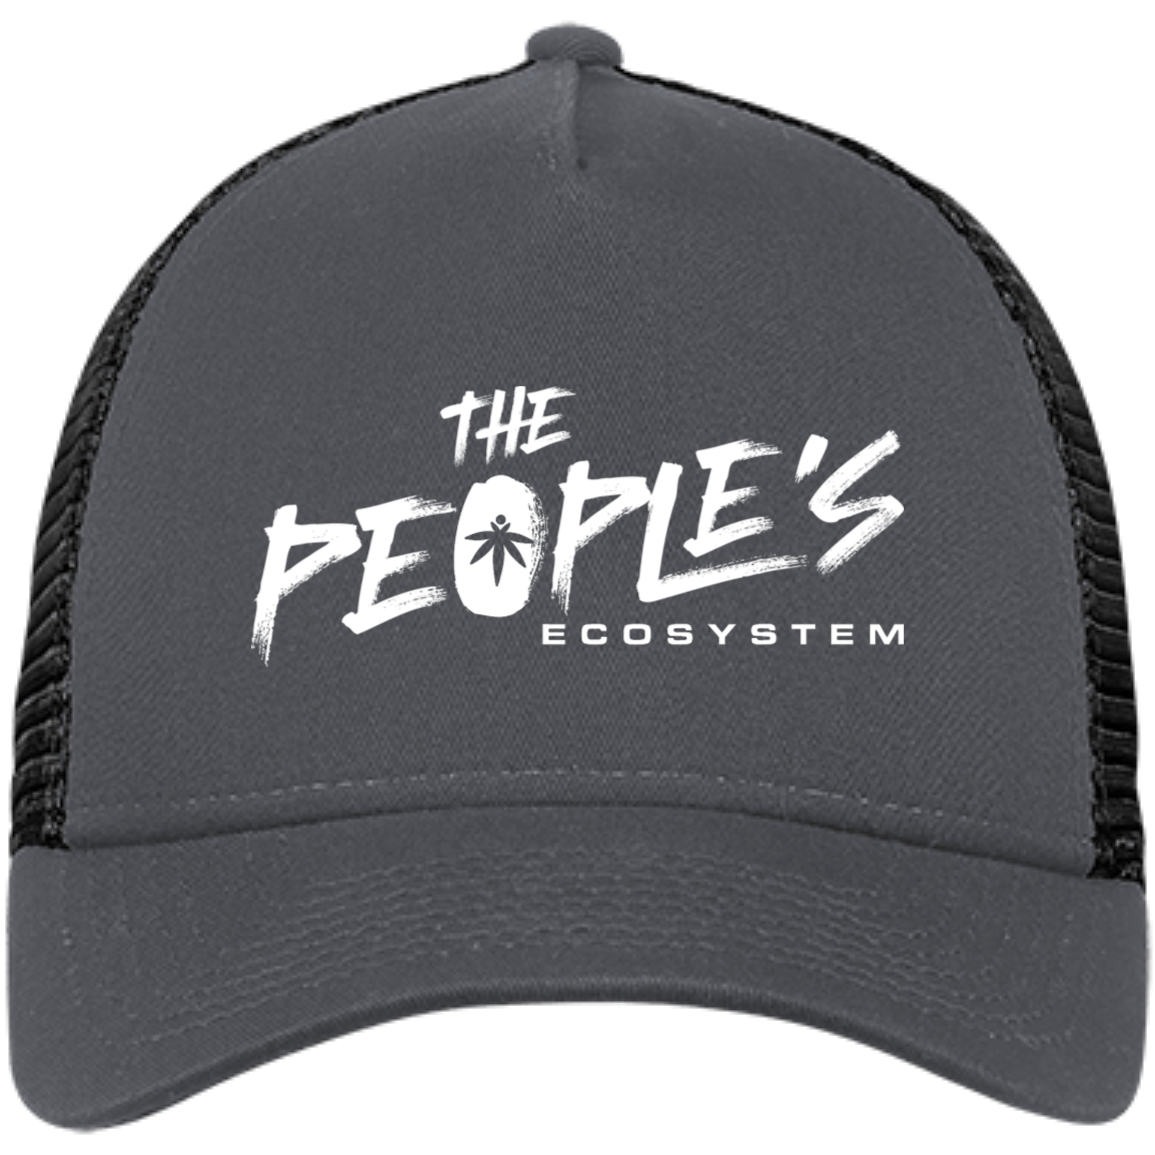 The People's Snapback Trucker Cap (E)